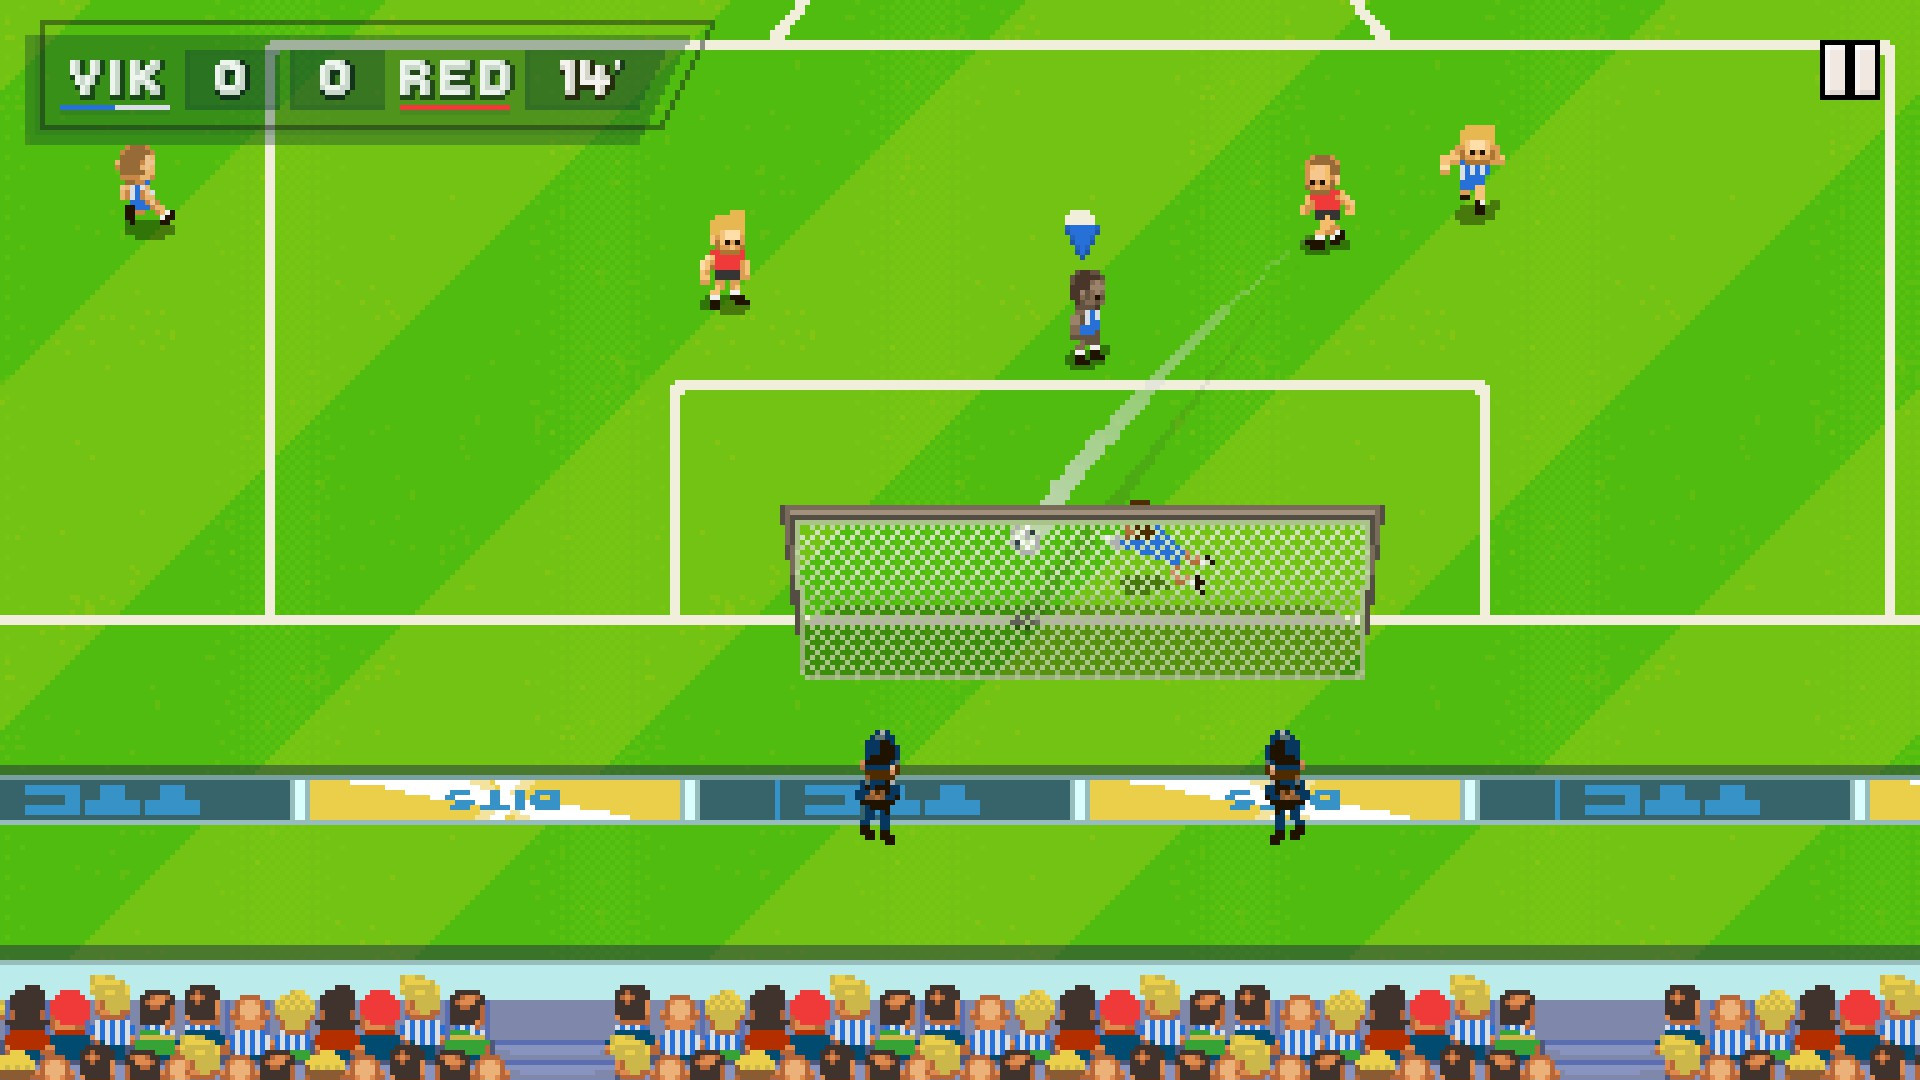 Super Arcade Football screenshot